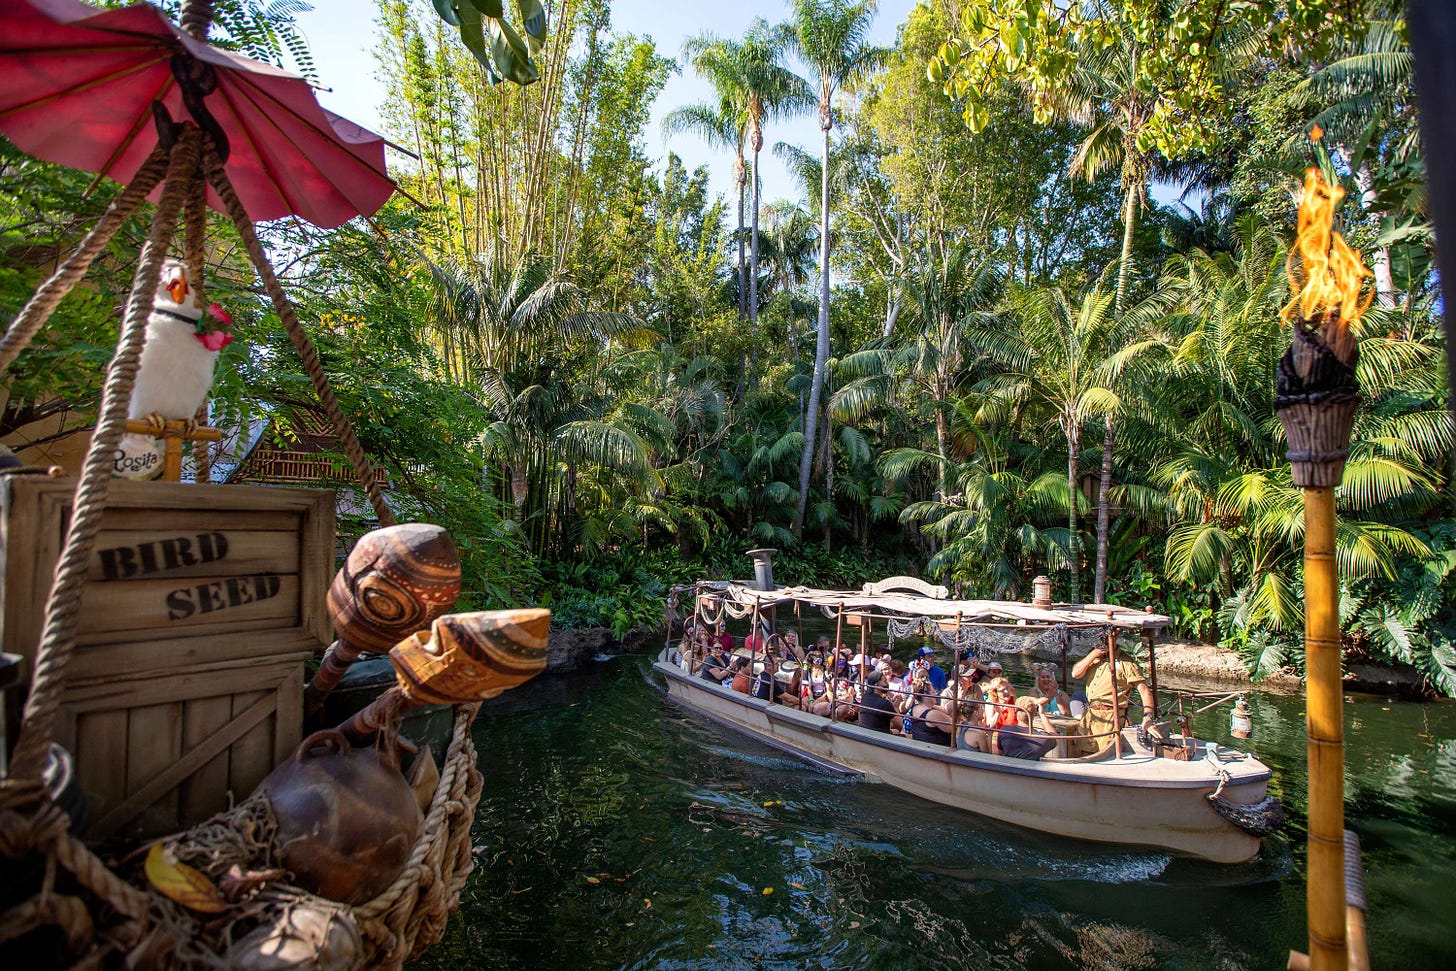 Disneyland's revamped Jungle Cruise ride set to reopen | CNN